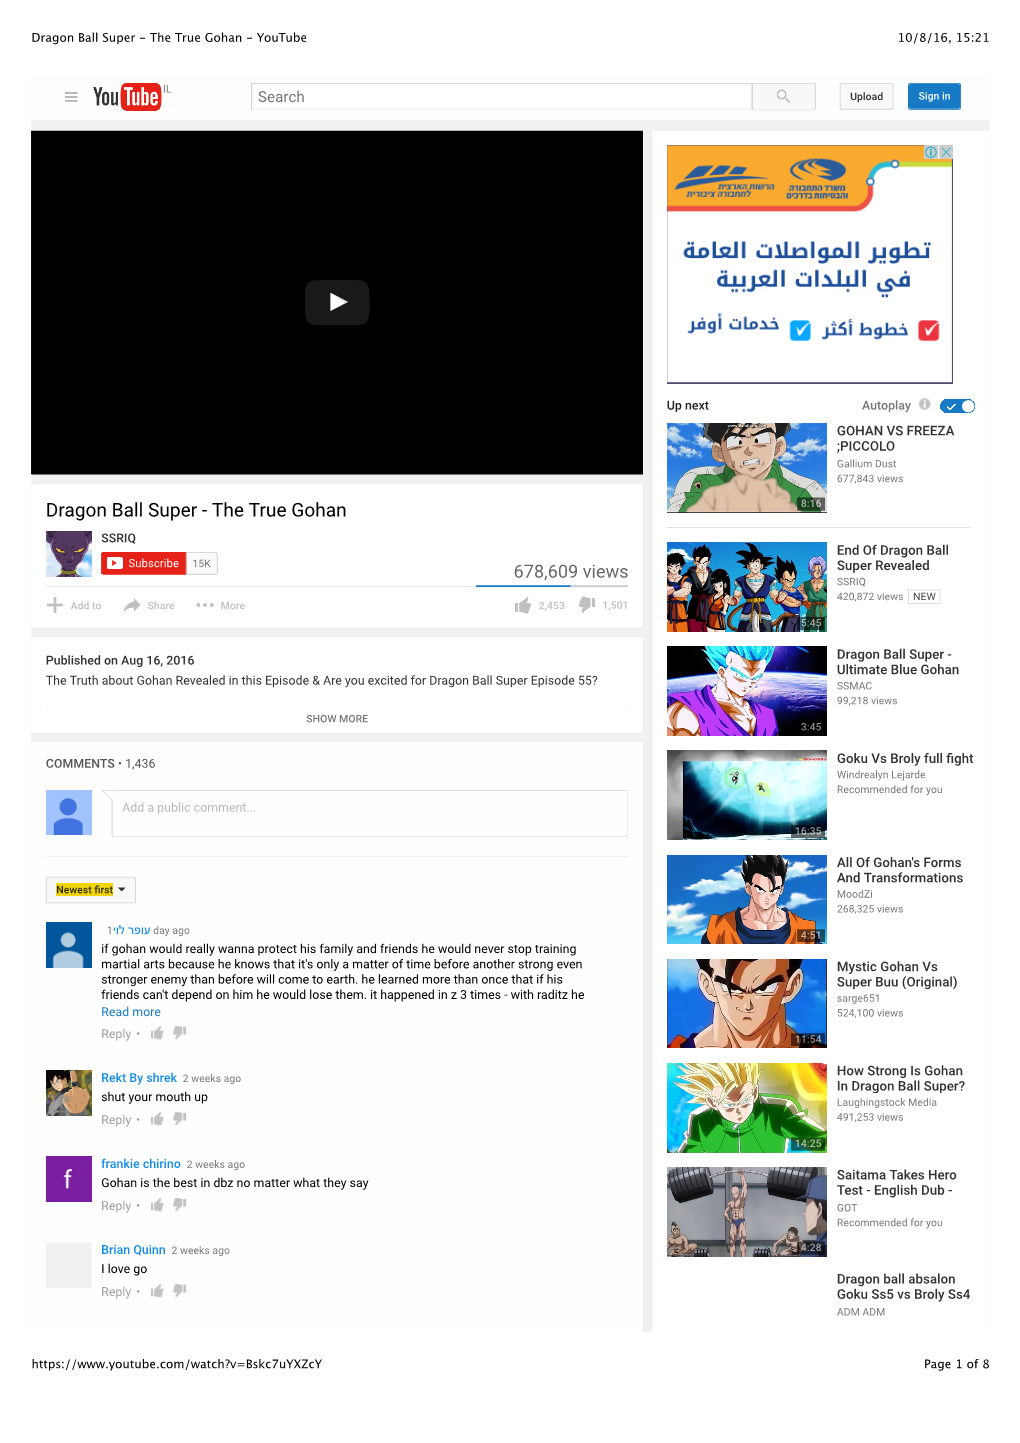 Dragon Ball Super - the True Gohan - Youtube 10/8/16, 15:21